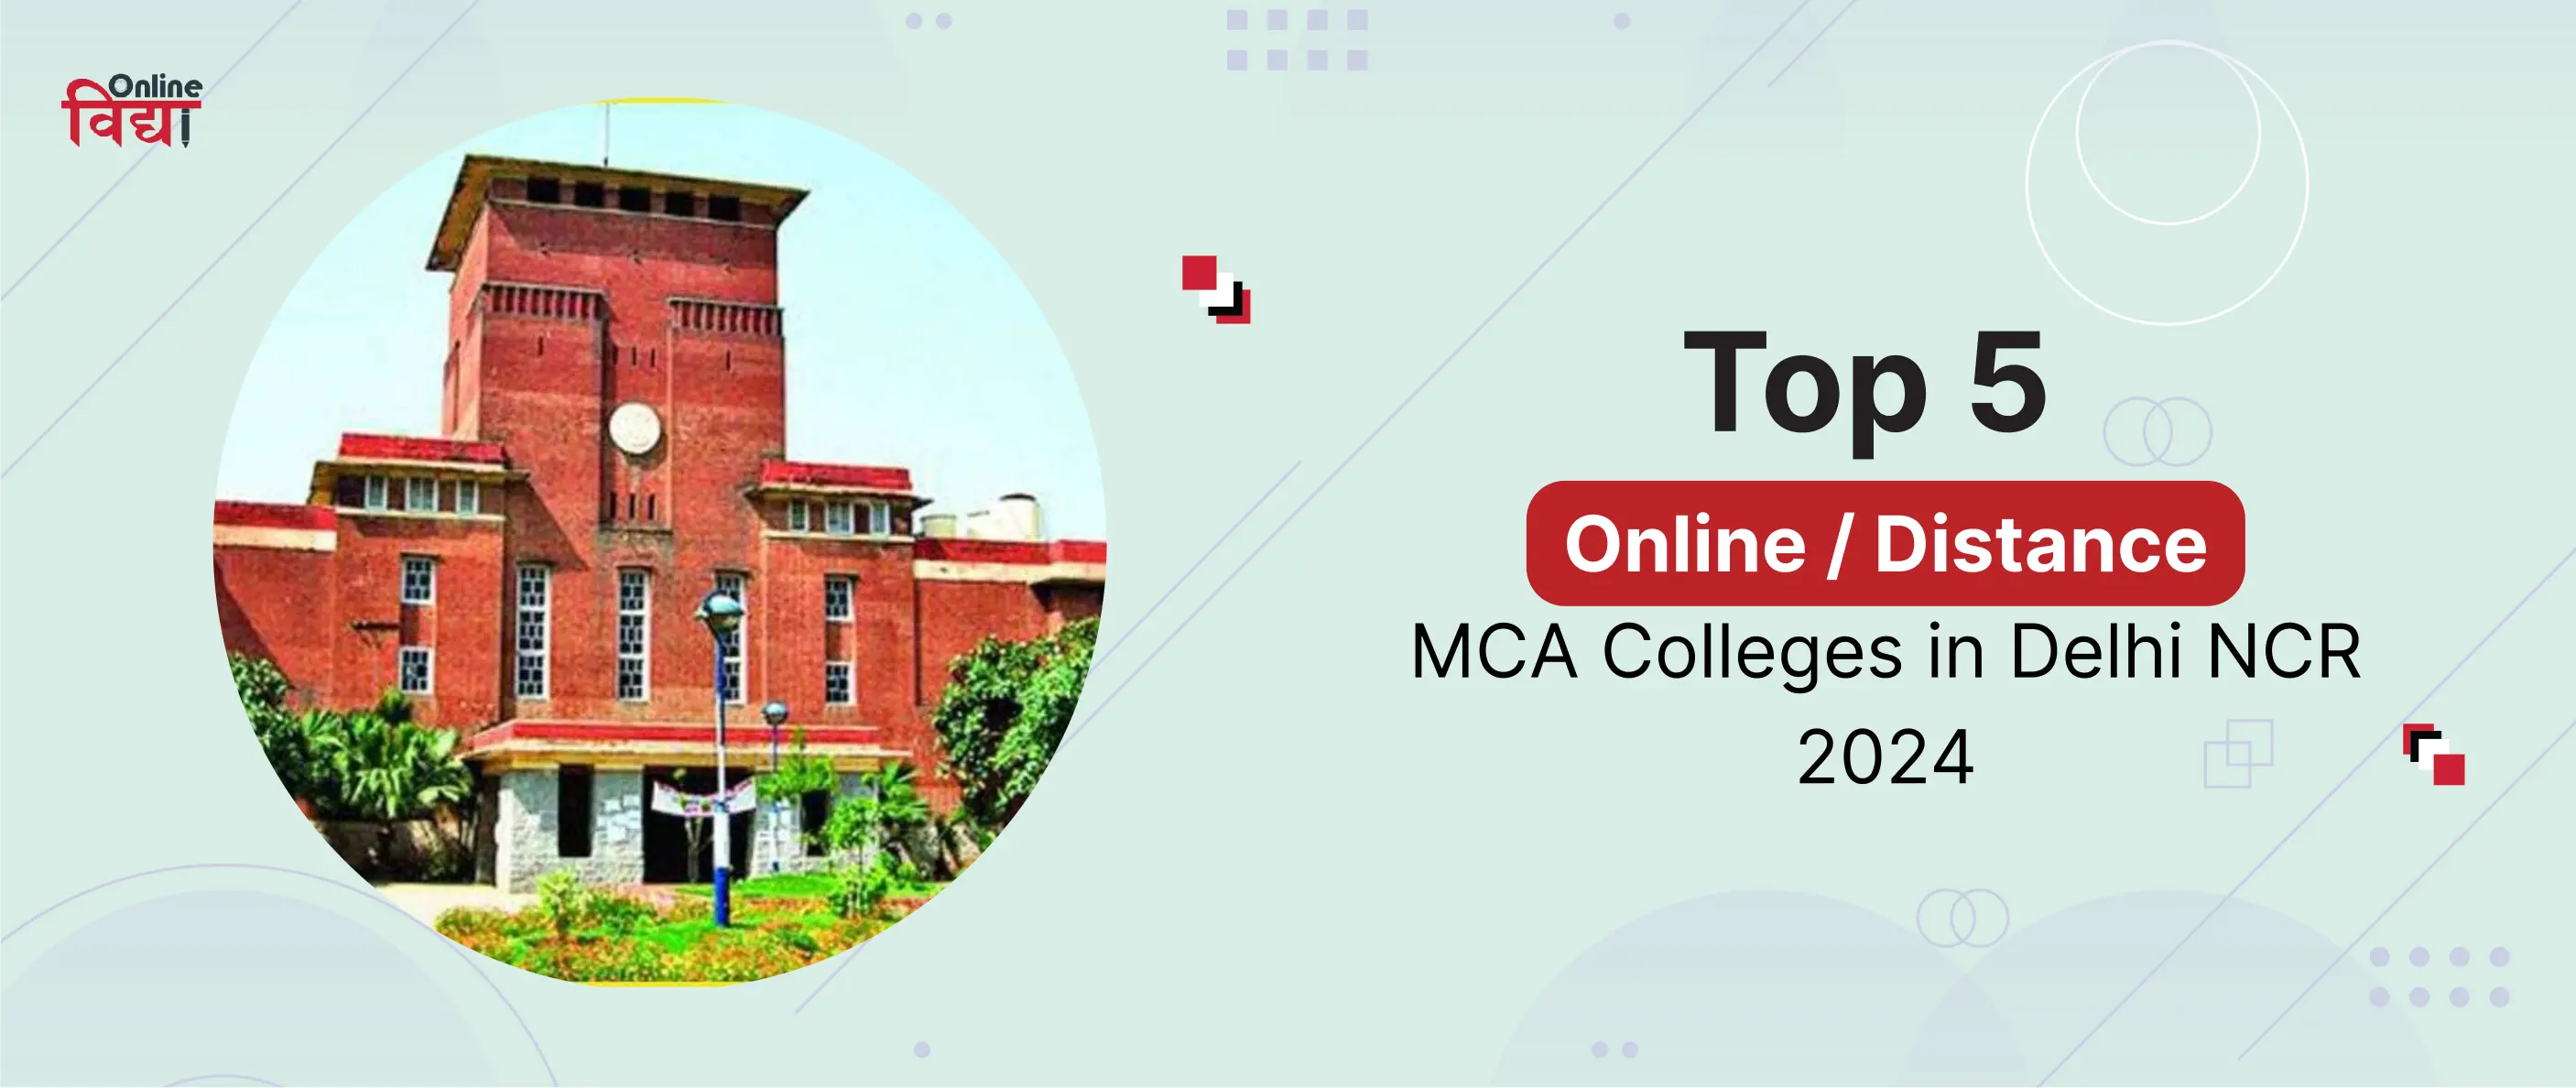 Top 5 Online/Distance MCA Colleges in Delhi NCR 2024